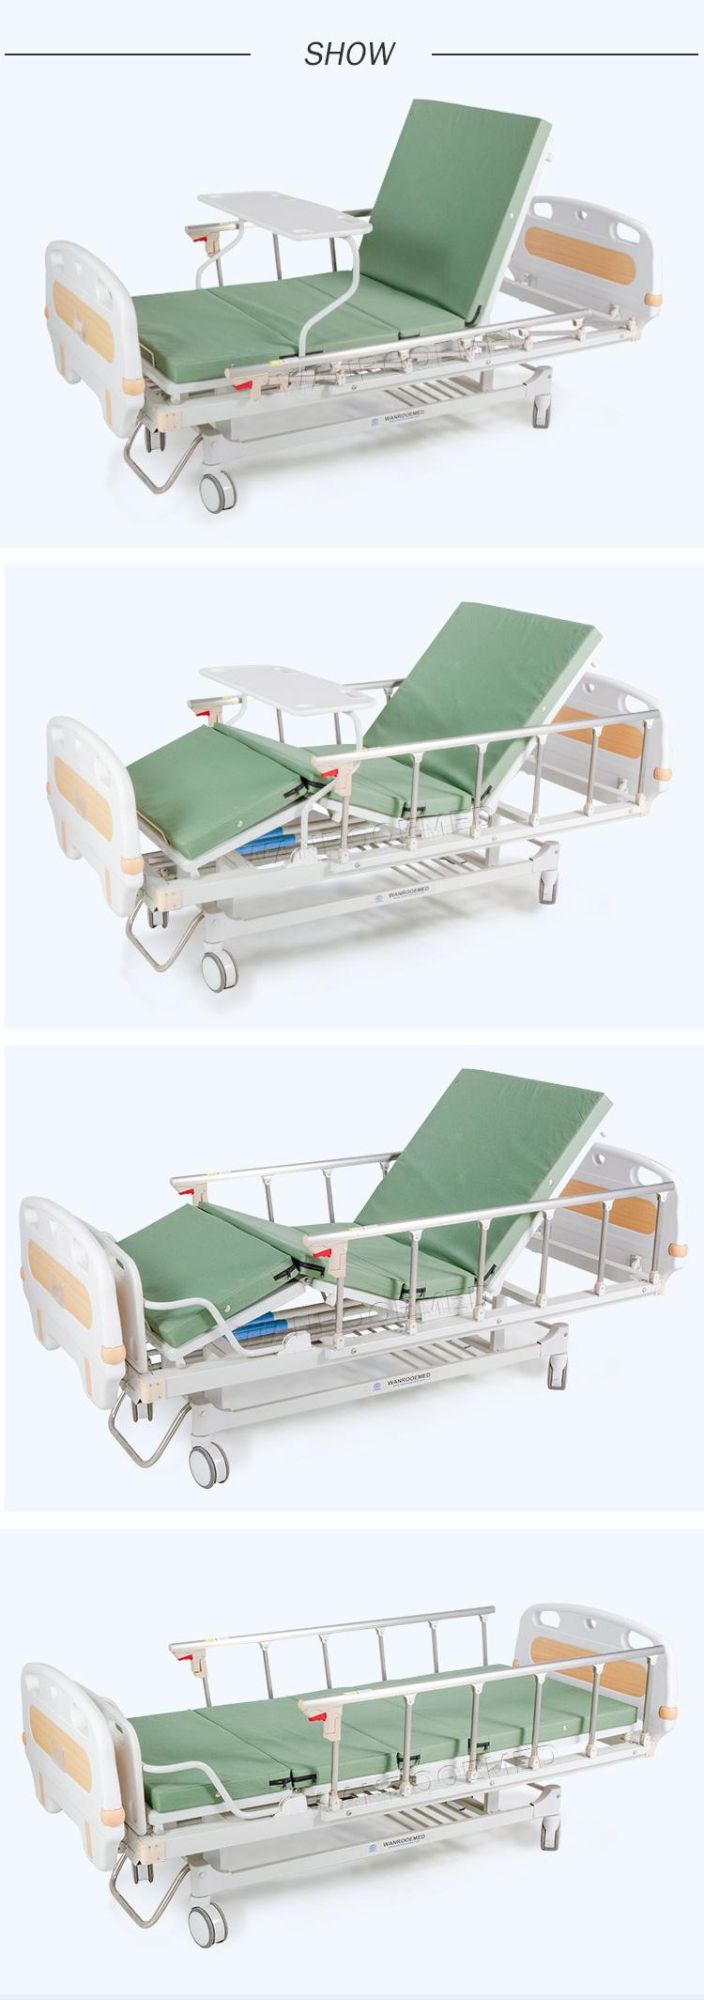 Medical Equipment Manual 2 Crank Hospital Simple Nursing Beds for Patient